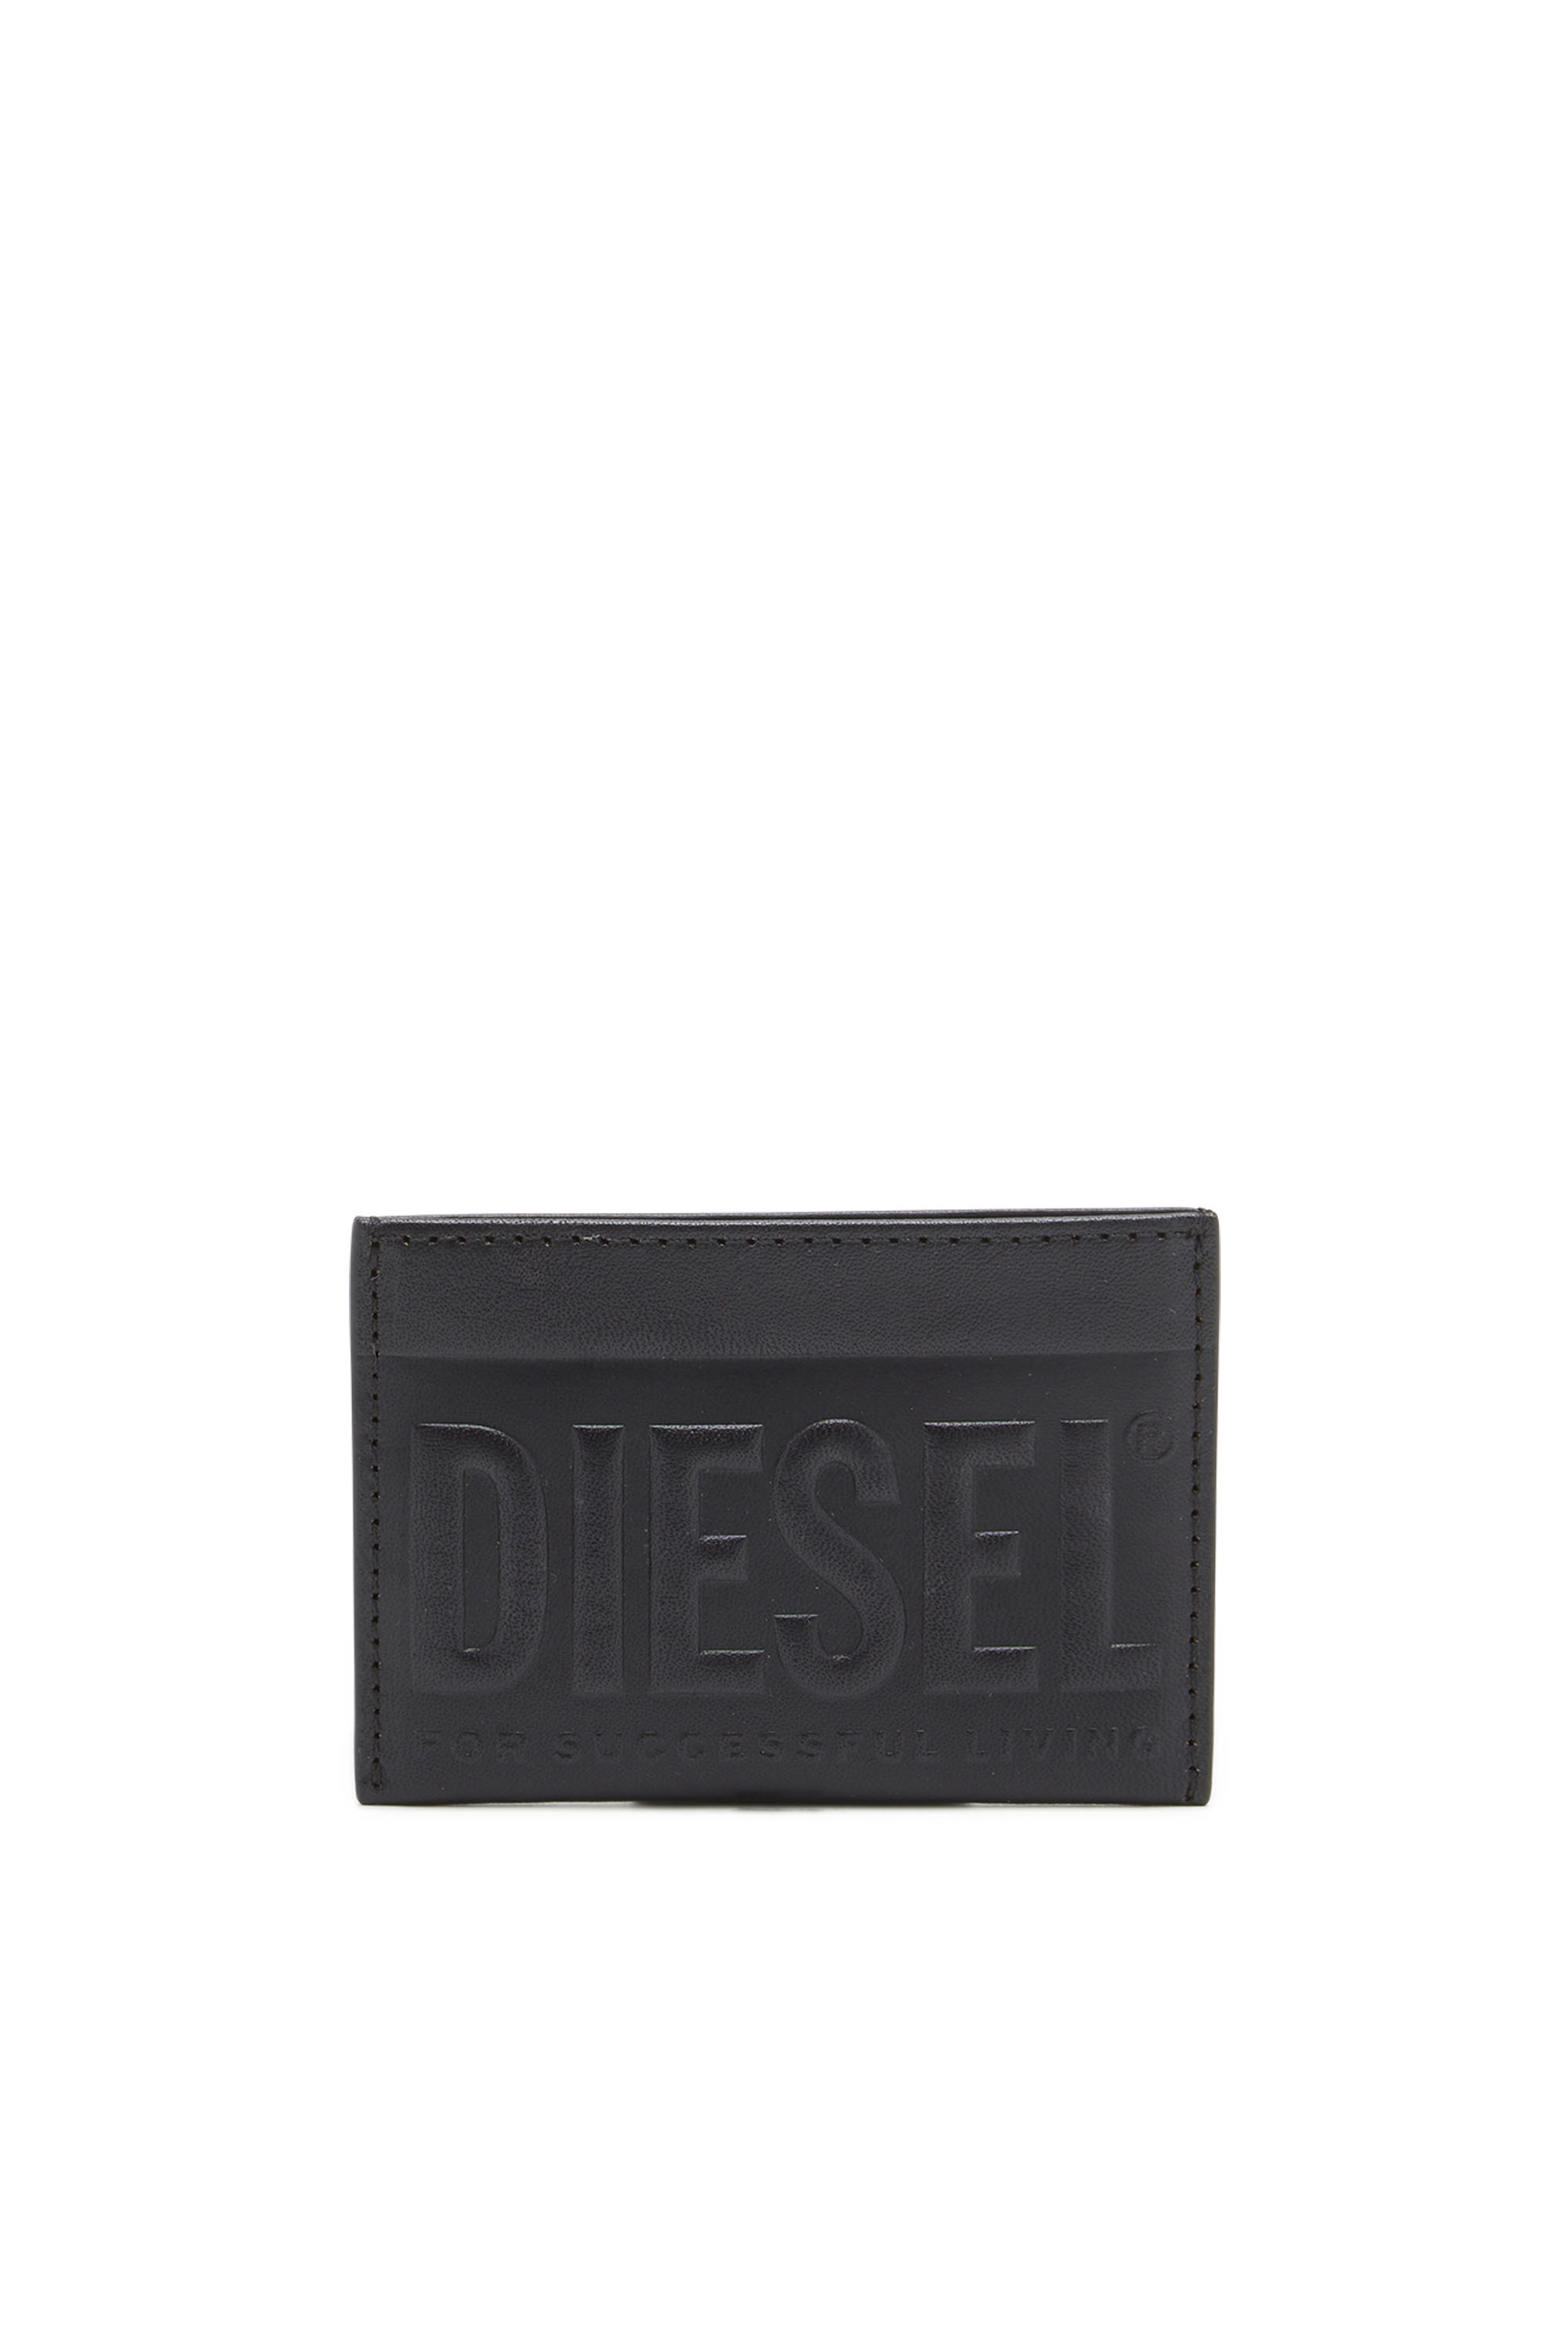 Diesel - DSL 3D EASY CARD HOLDER, Man Leather card holder with embossed logo in Black - Image 1